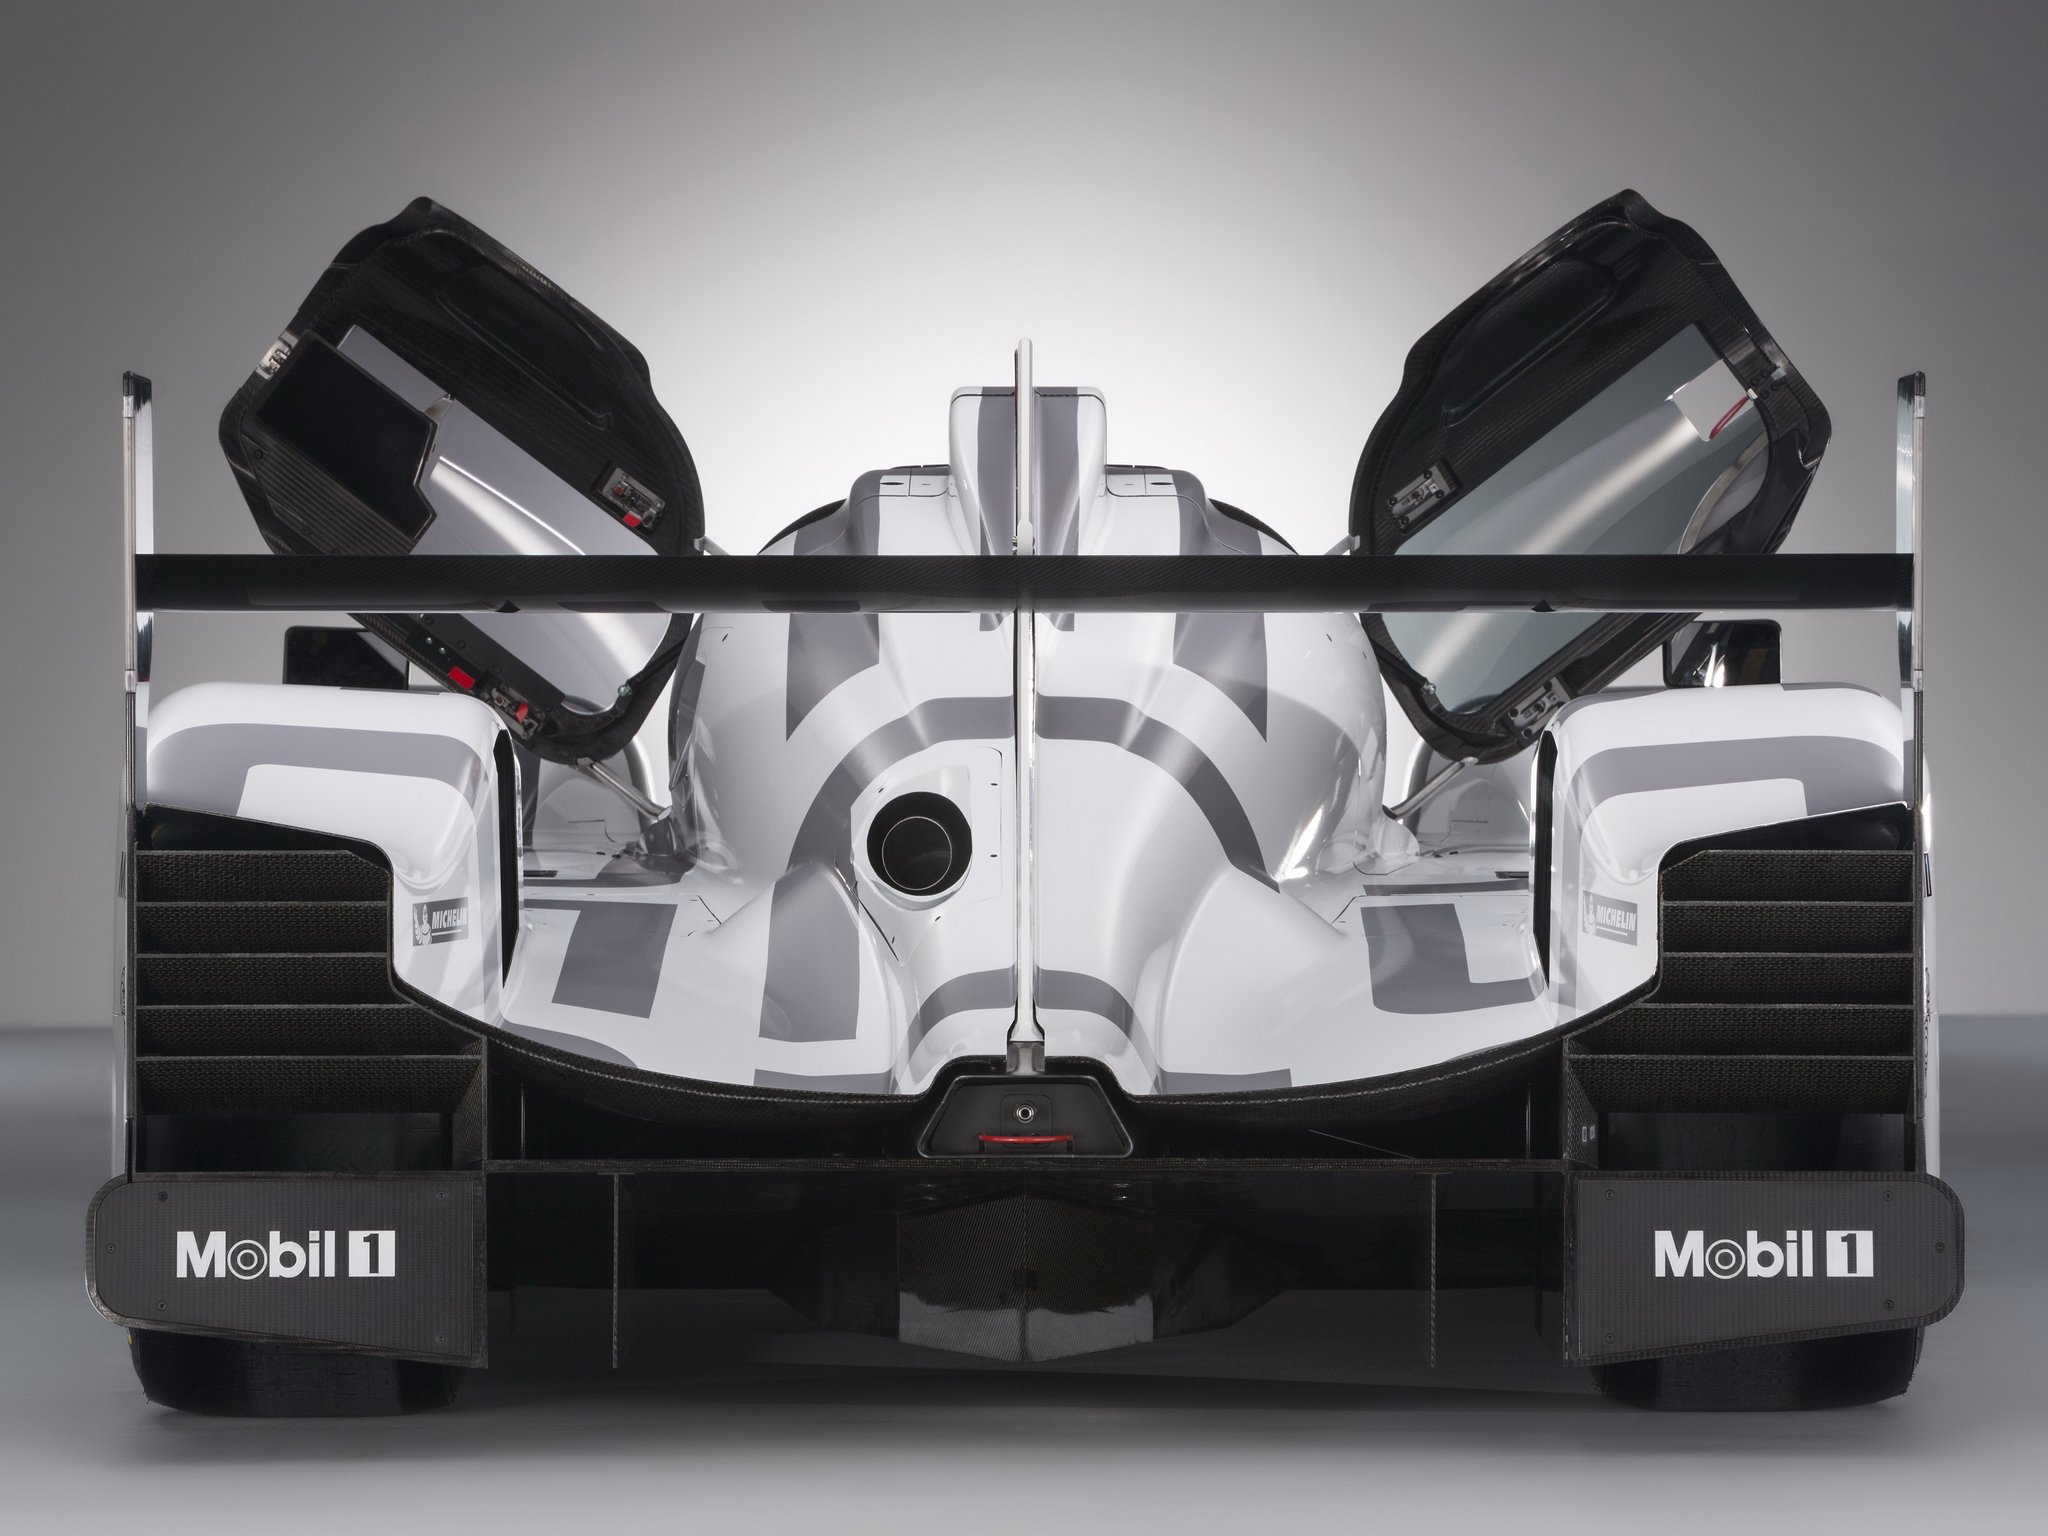 2014, Porsche, 919, Hybrid, Le mans, Prototype, Race, Racing Wallpaper